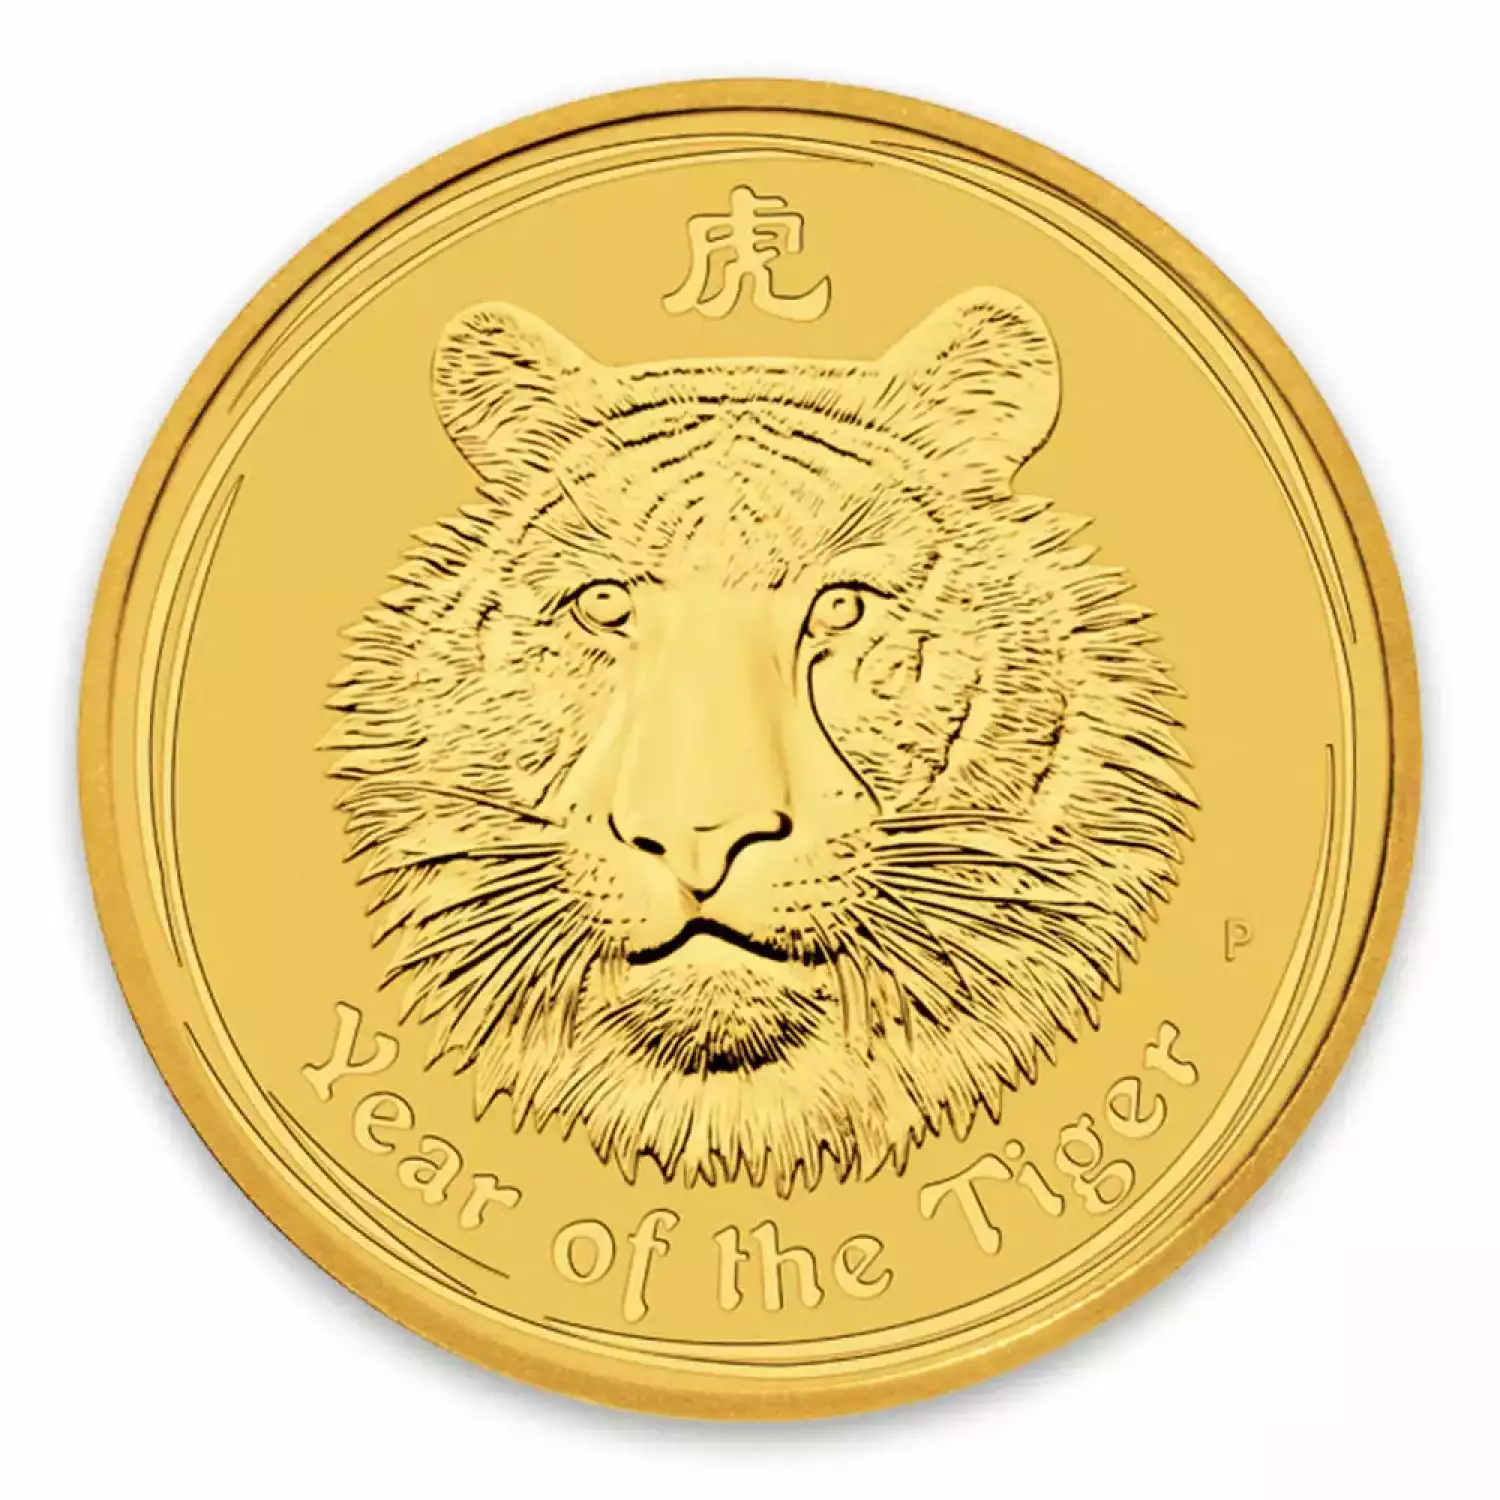 2010 10 kg Australian Perth Mint Gold Lunar II: Year of the Tiger (3)